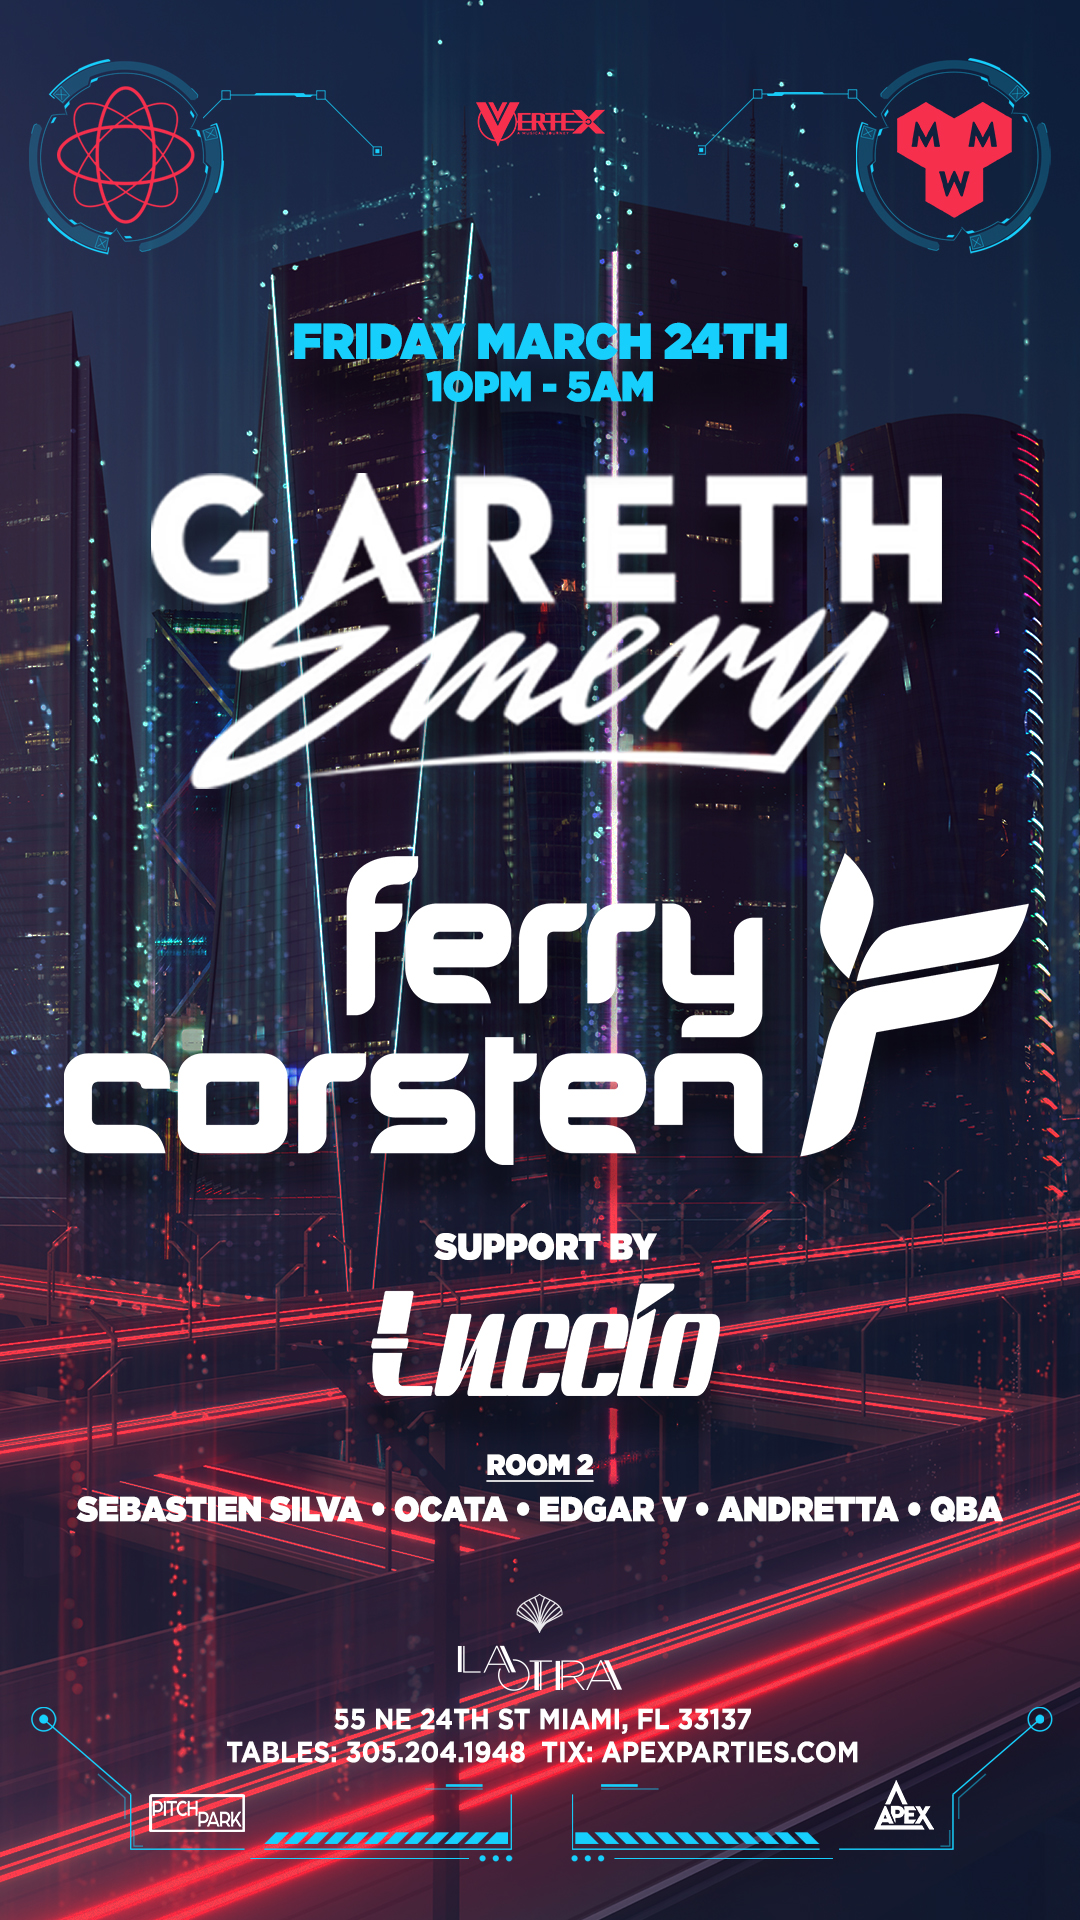 Gareth Emery & Ferry Corsten at Miami Music Week - Página trasera